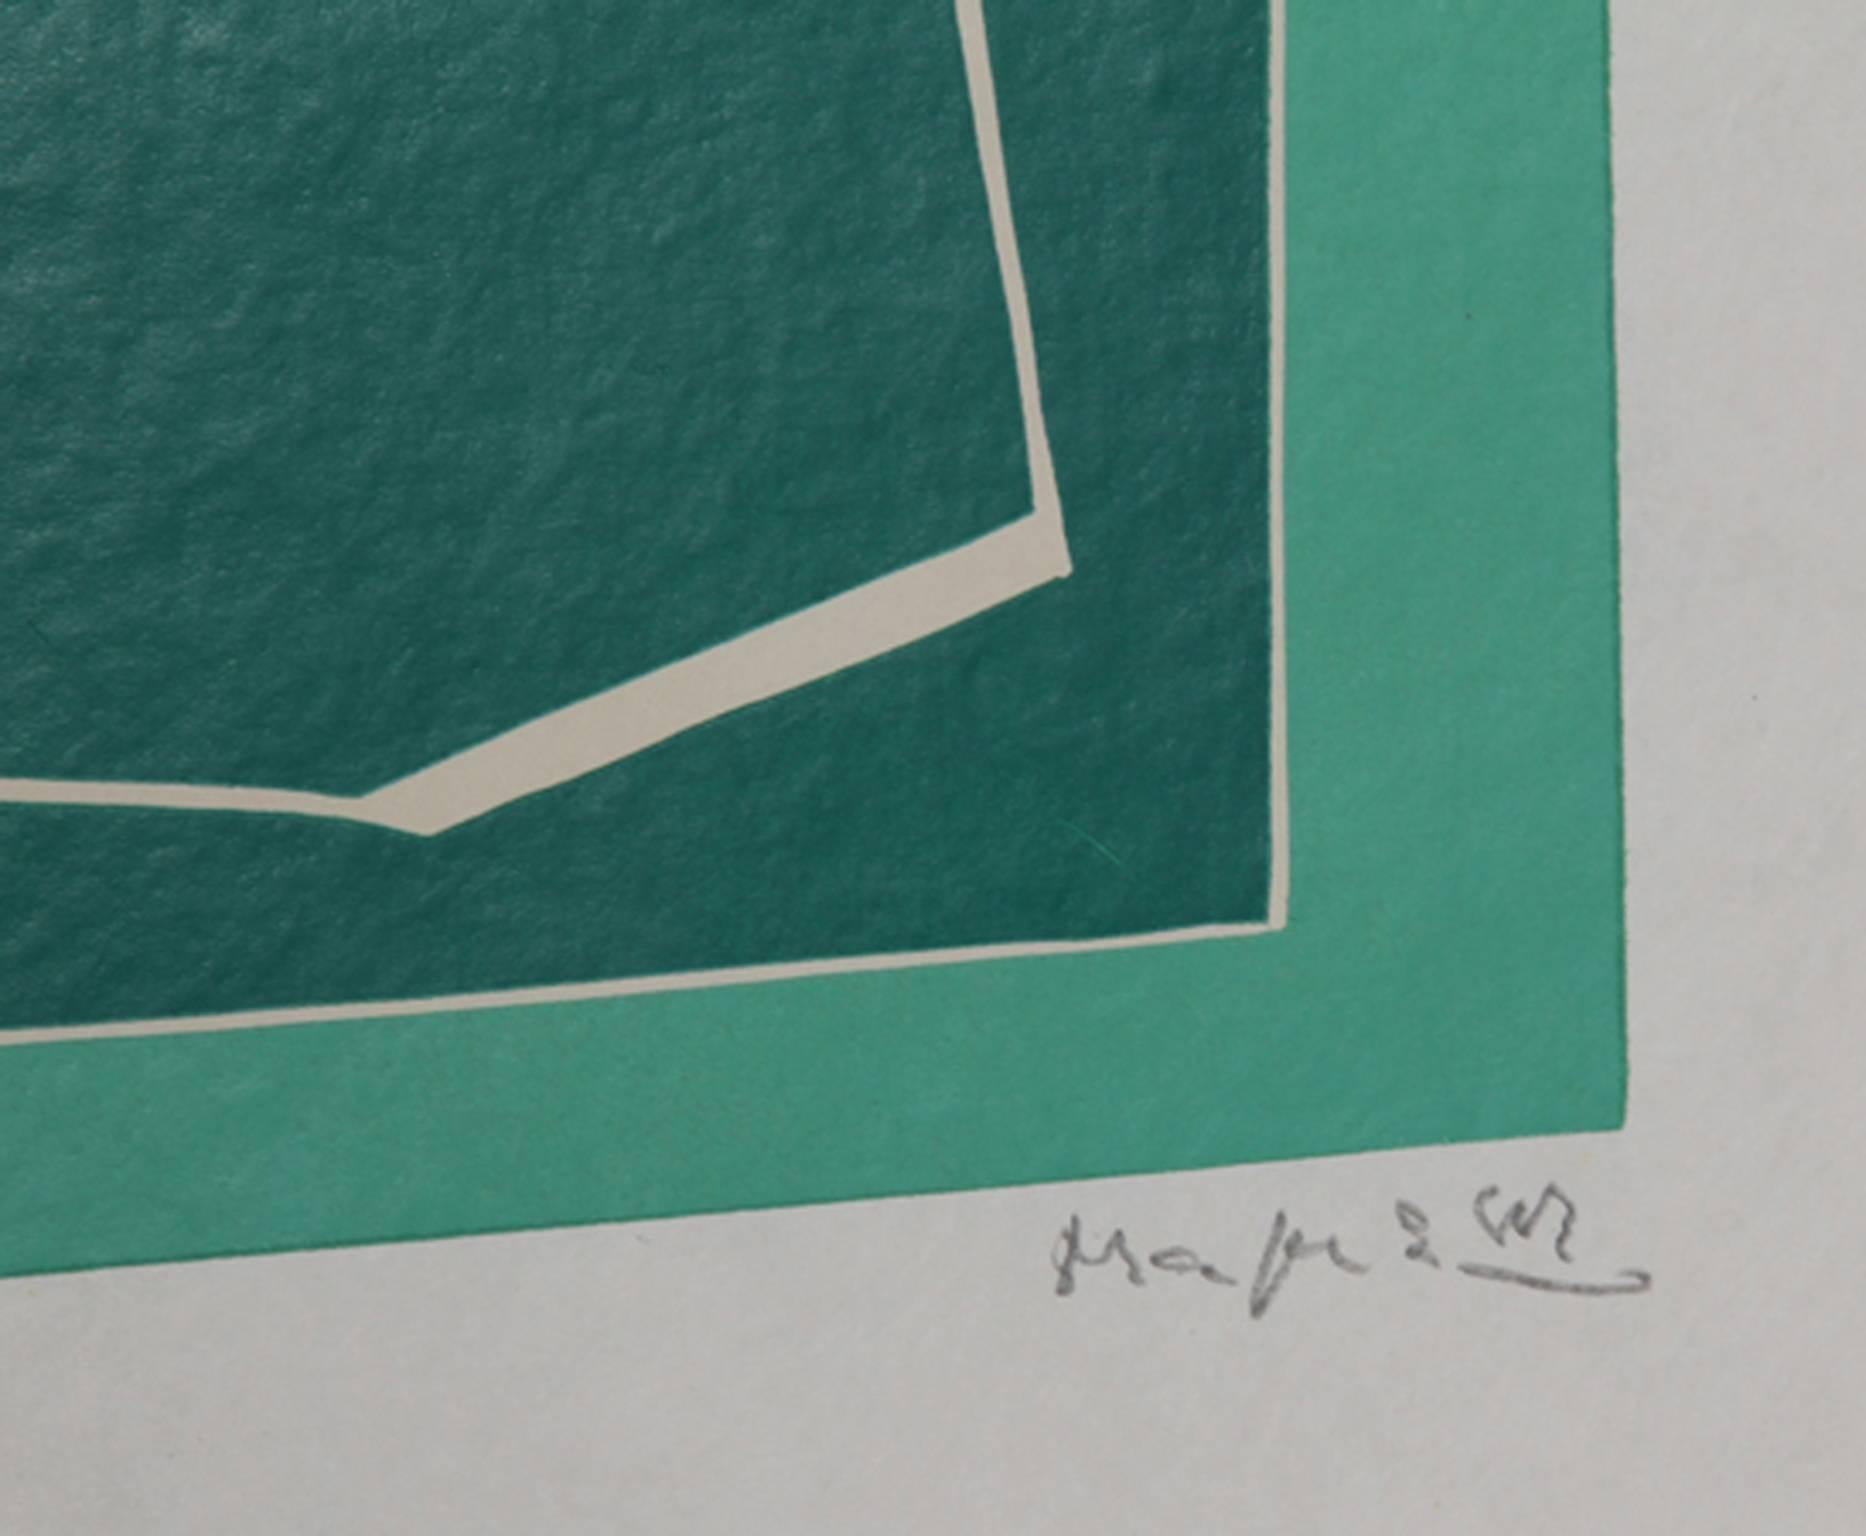 Artist: Alberto Magnelli, Italian (1888 - 1971)
Title: II from La Magnanerie de la Ferrage
Year: 1971
Medium: Linocut on Japon, signed in pencil
Edition: Pour Leon Amiel
Image Size: 19.5 x 13.5 inches
Size: 25.5 in. x 20 in. (64.77 cm x 50.8